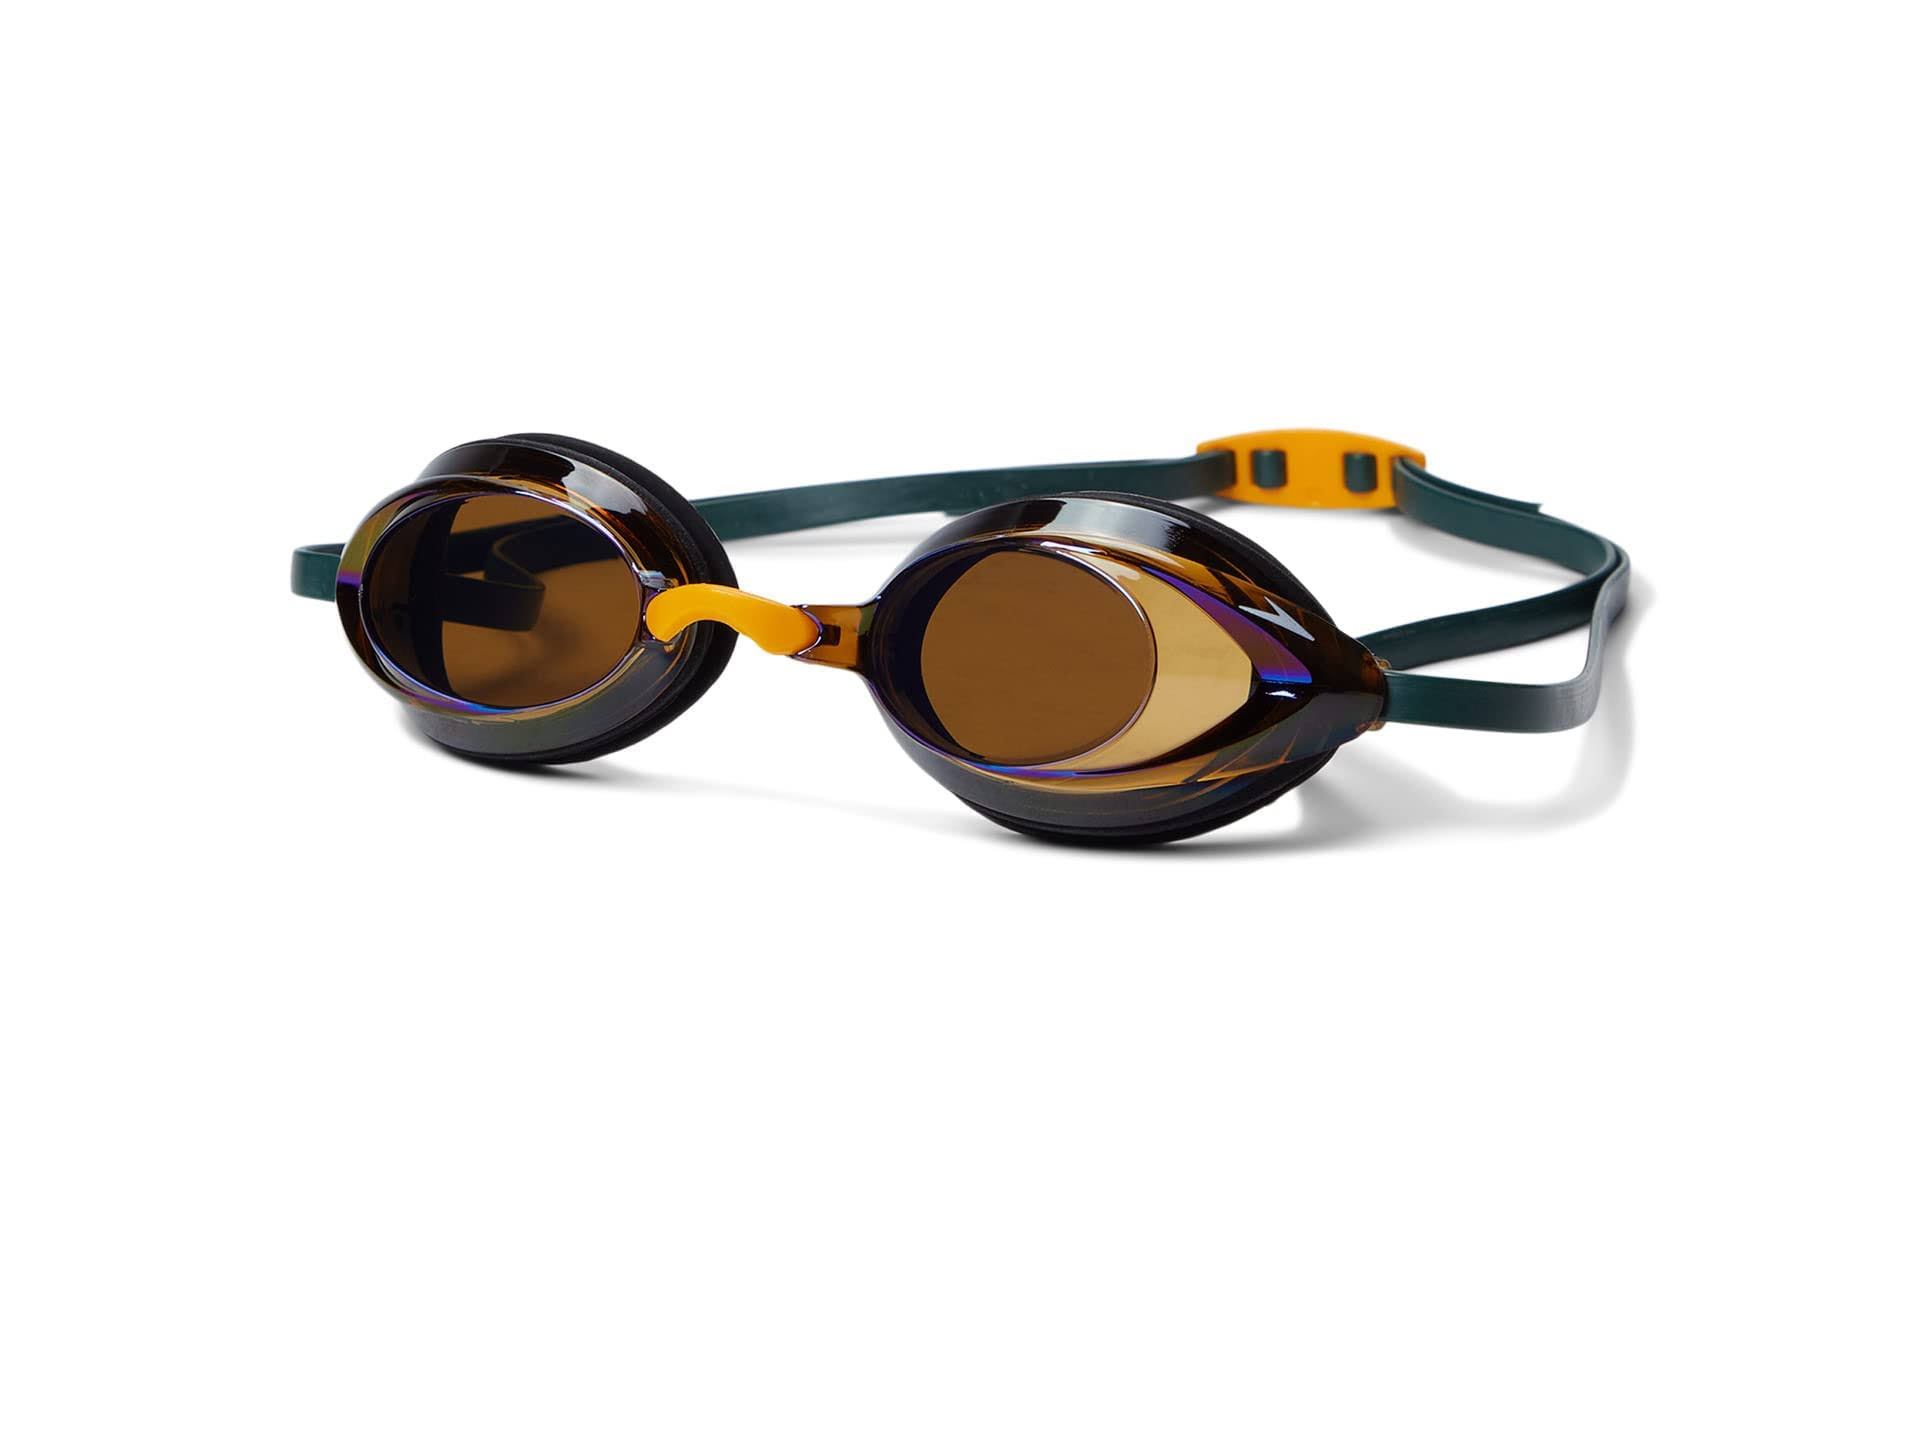 Speedo Unisex-Adult Swim Goggles Mirrored Vanquisher 2.0, Black/Amber/Emerald, One Size